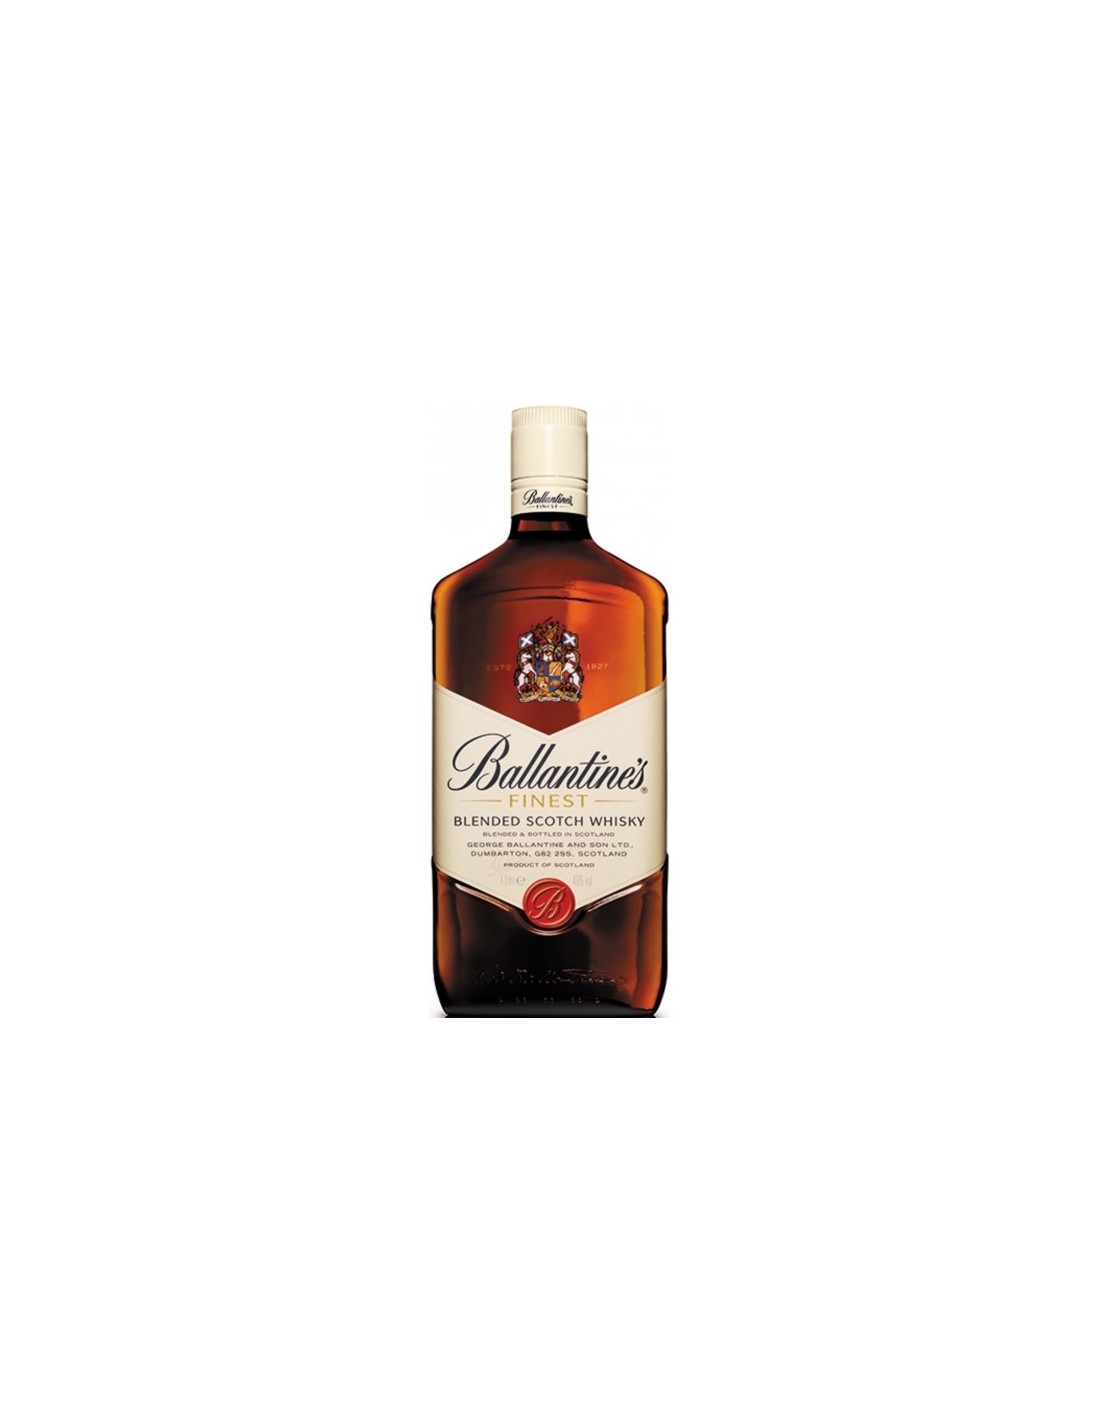 Whisky Ballantine’s Finest, 1L, 40% alc., Scotia alcooldiscount.ro